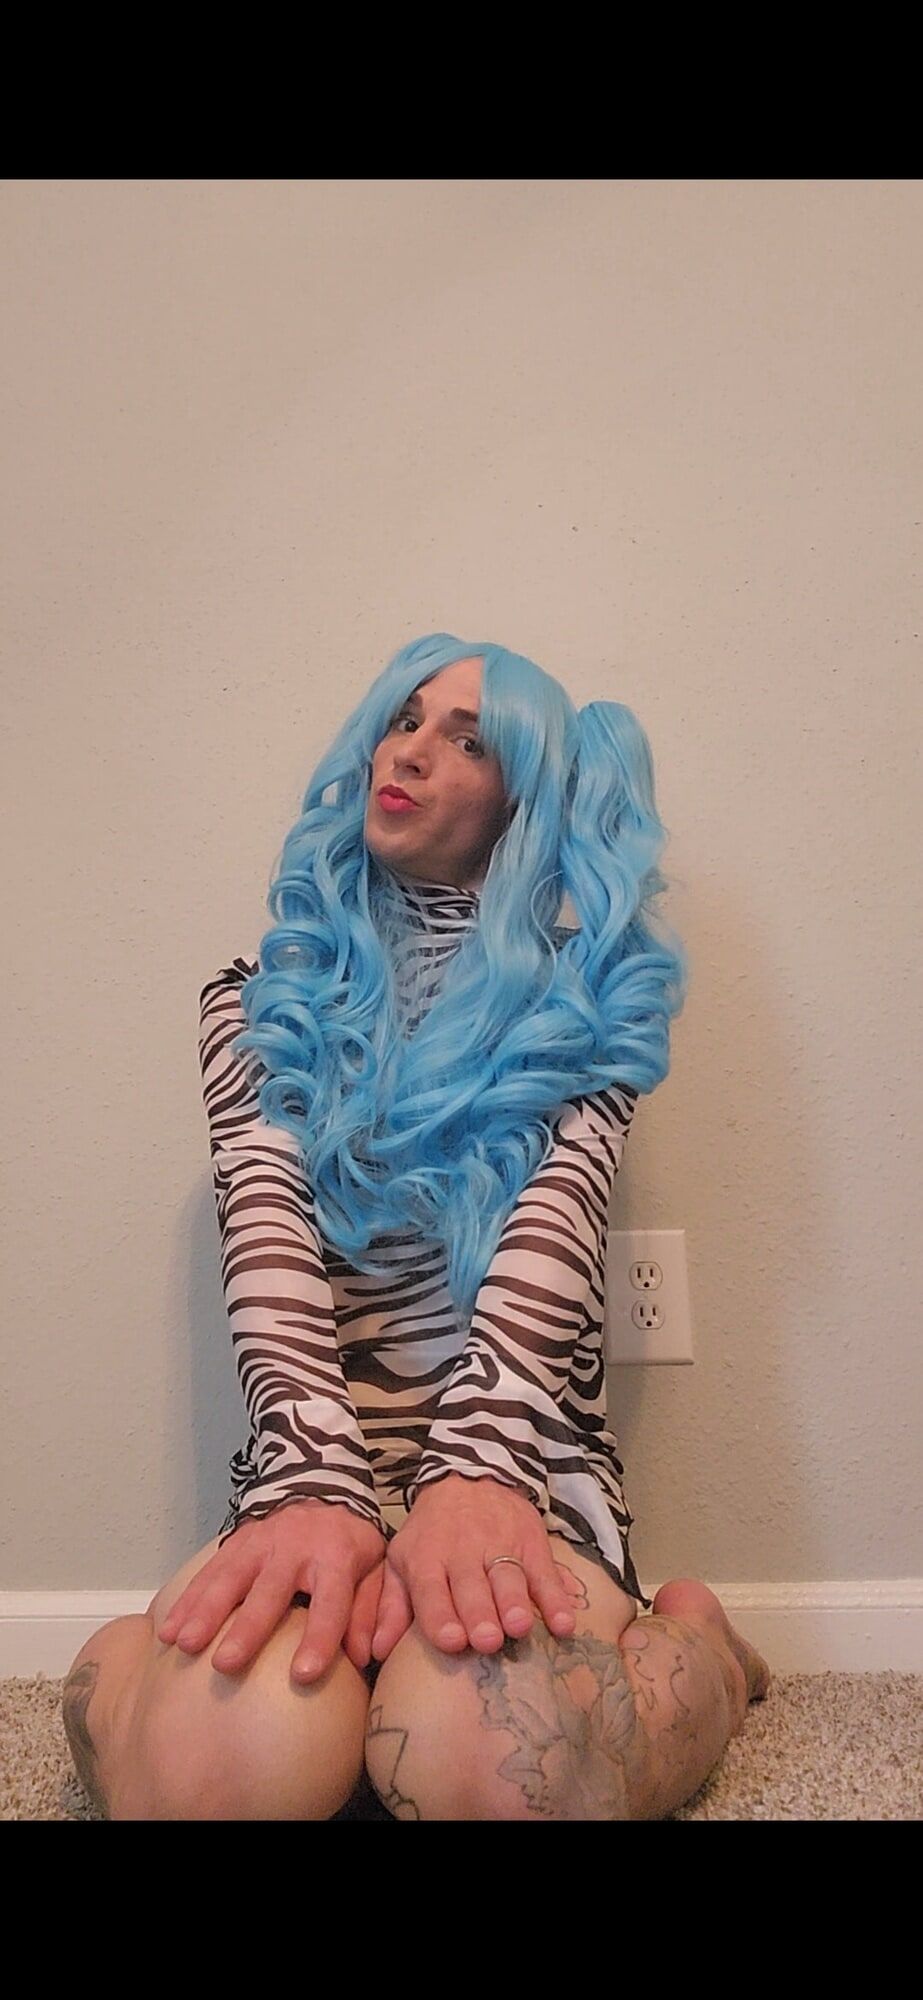 Blue wig and zebra print dress